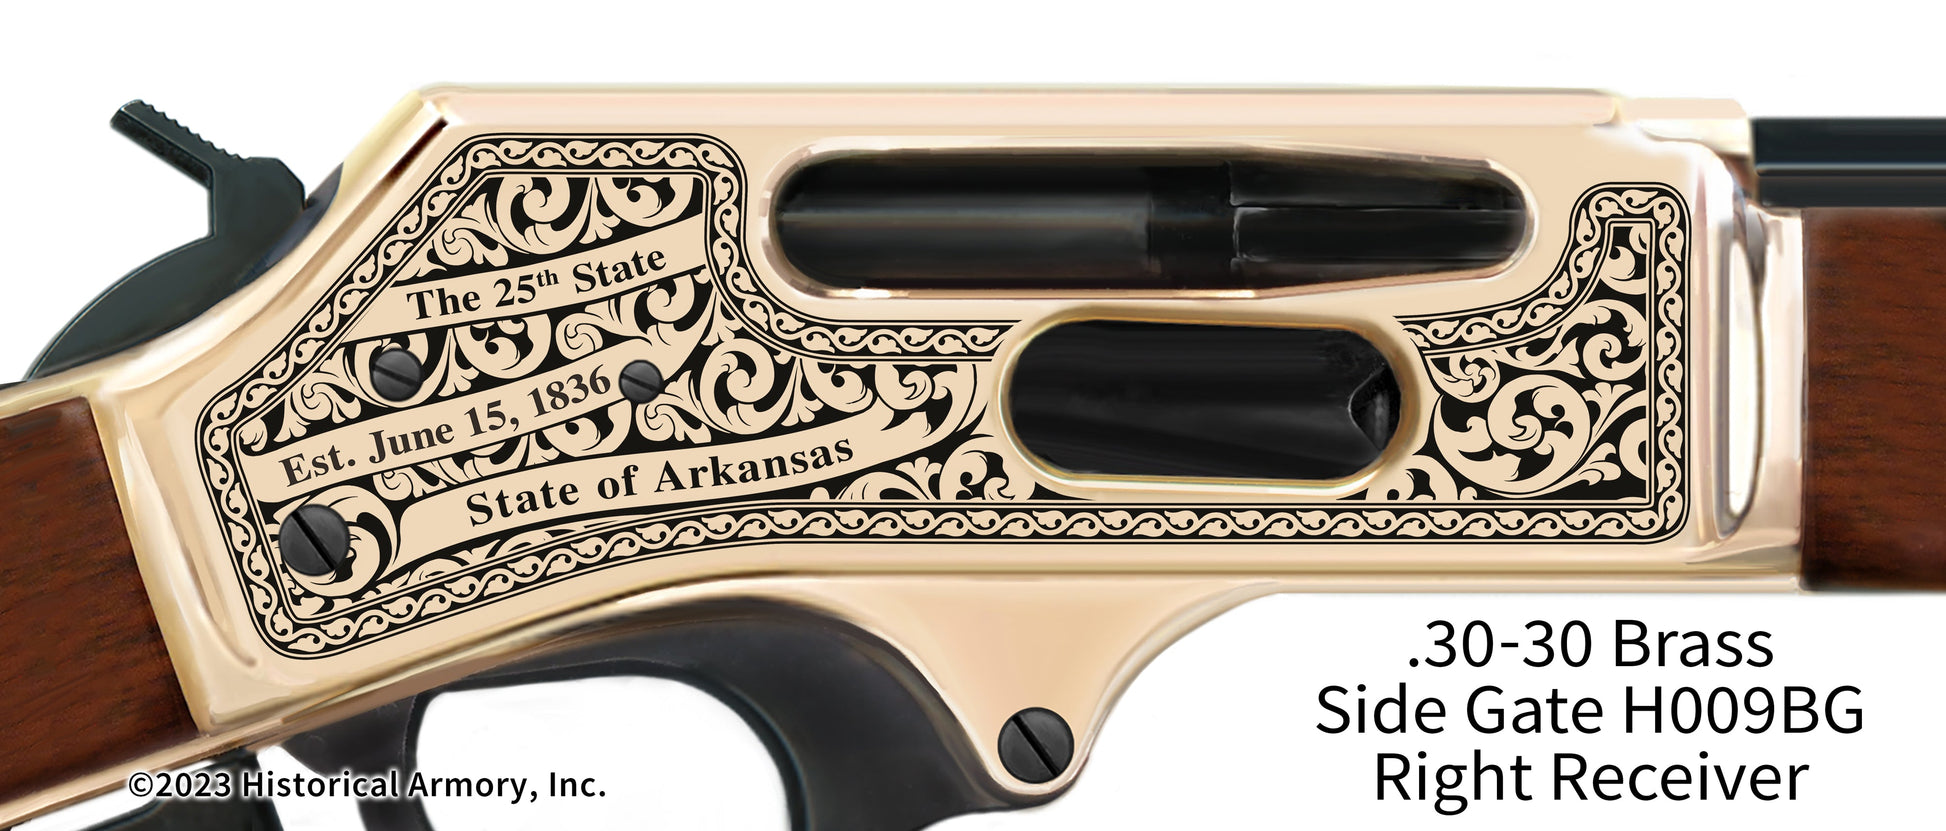 Little River County Arkansas Engraved Henry .30-30 Brass Side Gate Rifle